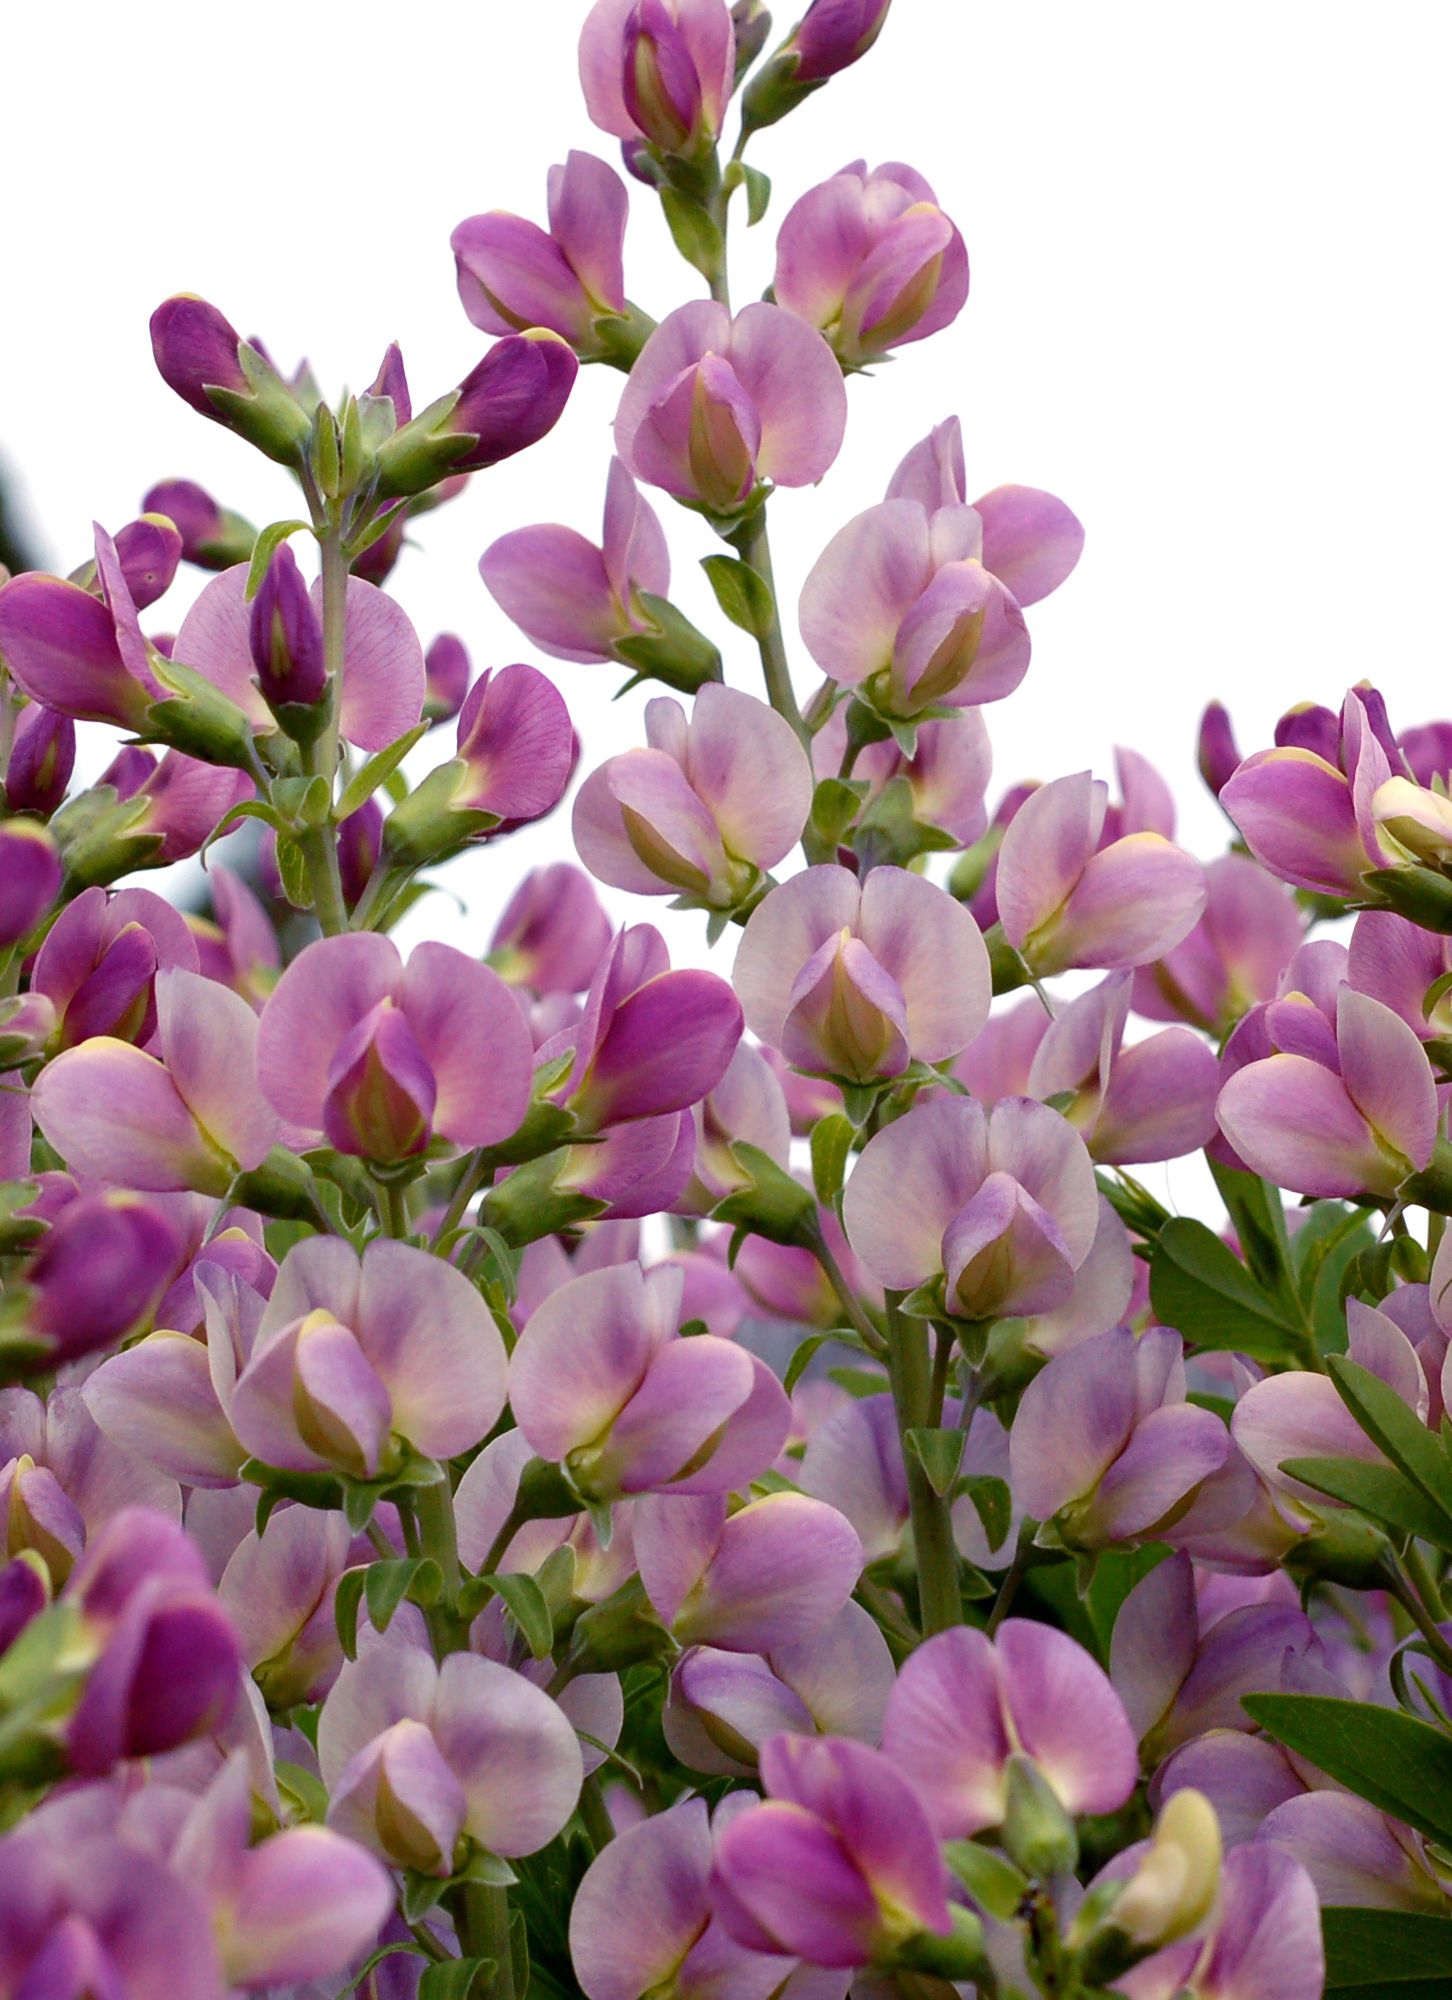 images/plants/baptisia/bap-lavendar-rose/bap-lavendar-rose-0002.jpg